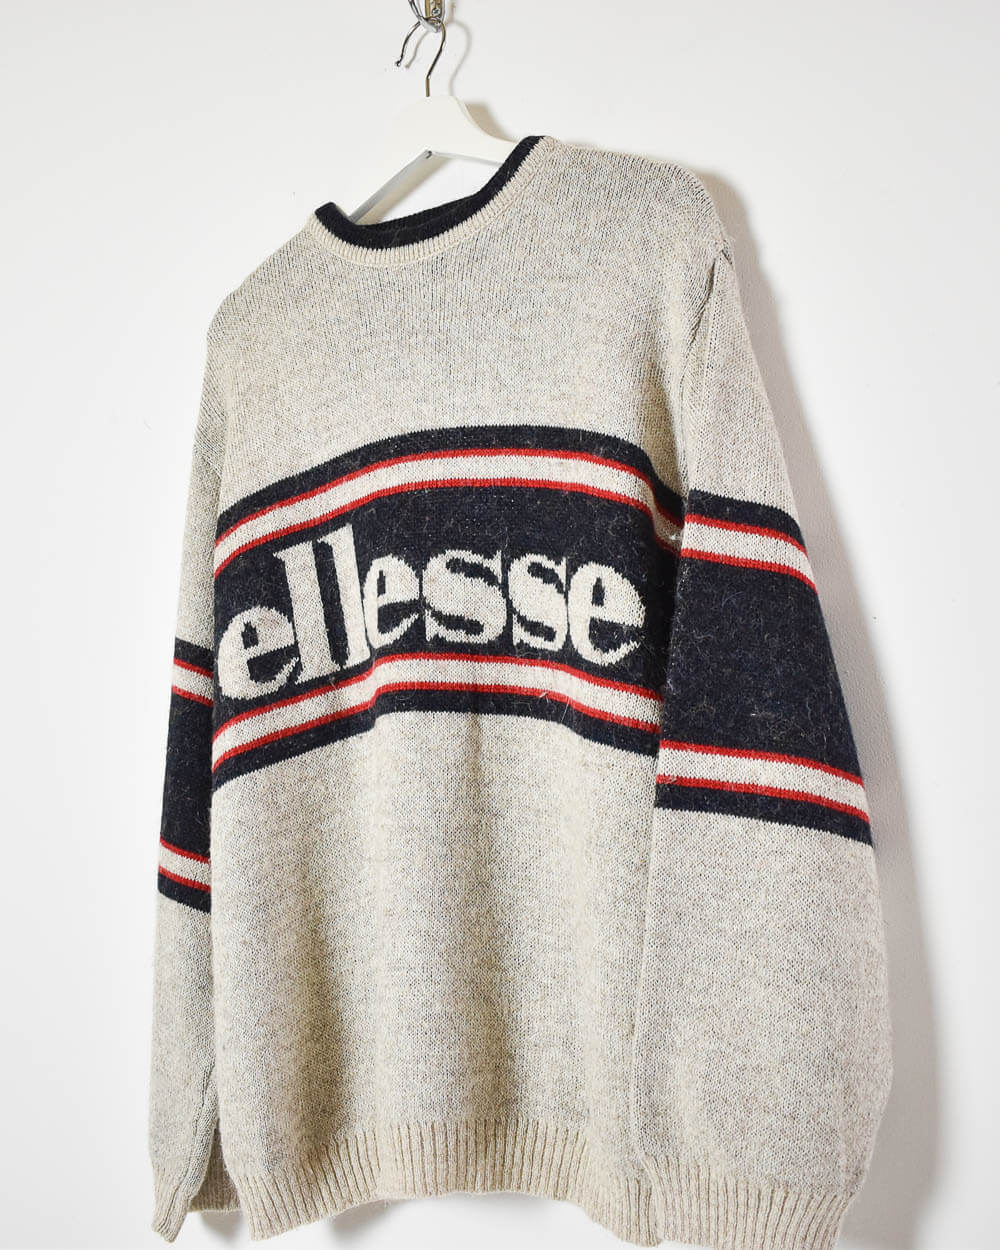 Stone Ellesse Knitted Sweatshirt - Medium